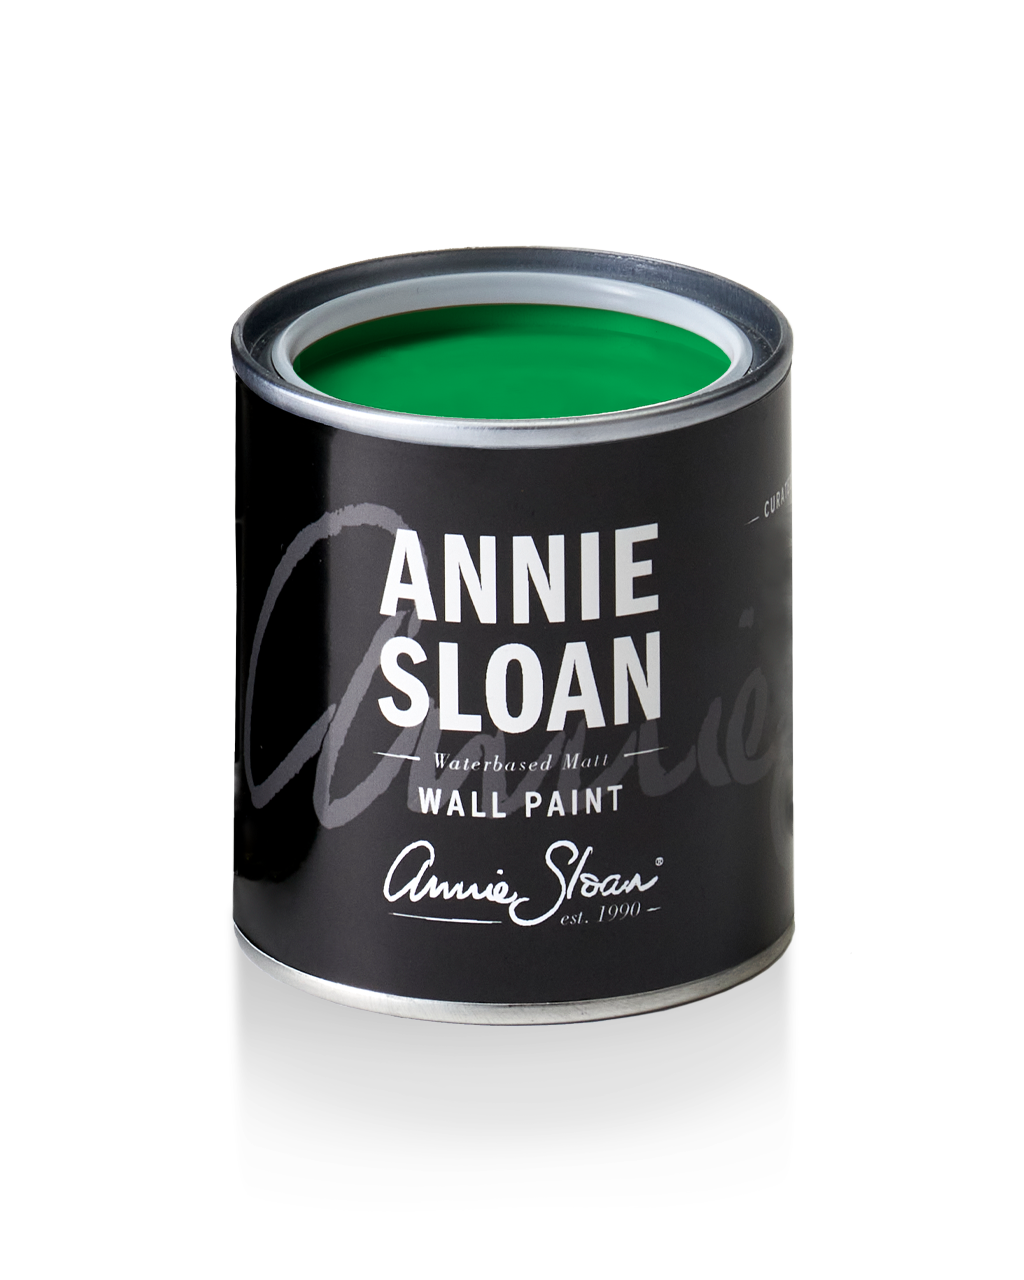 120ml tin of Schinkel Green by Annie Sloan